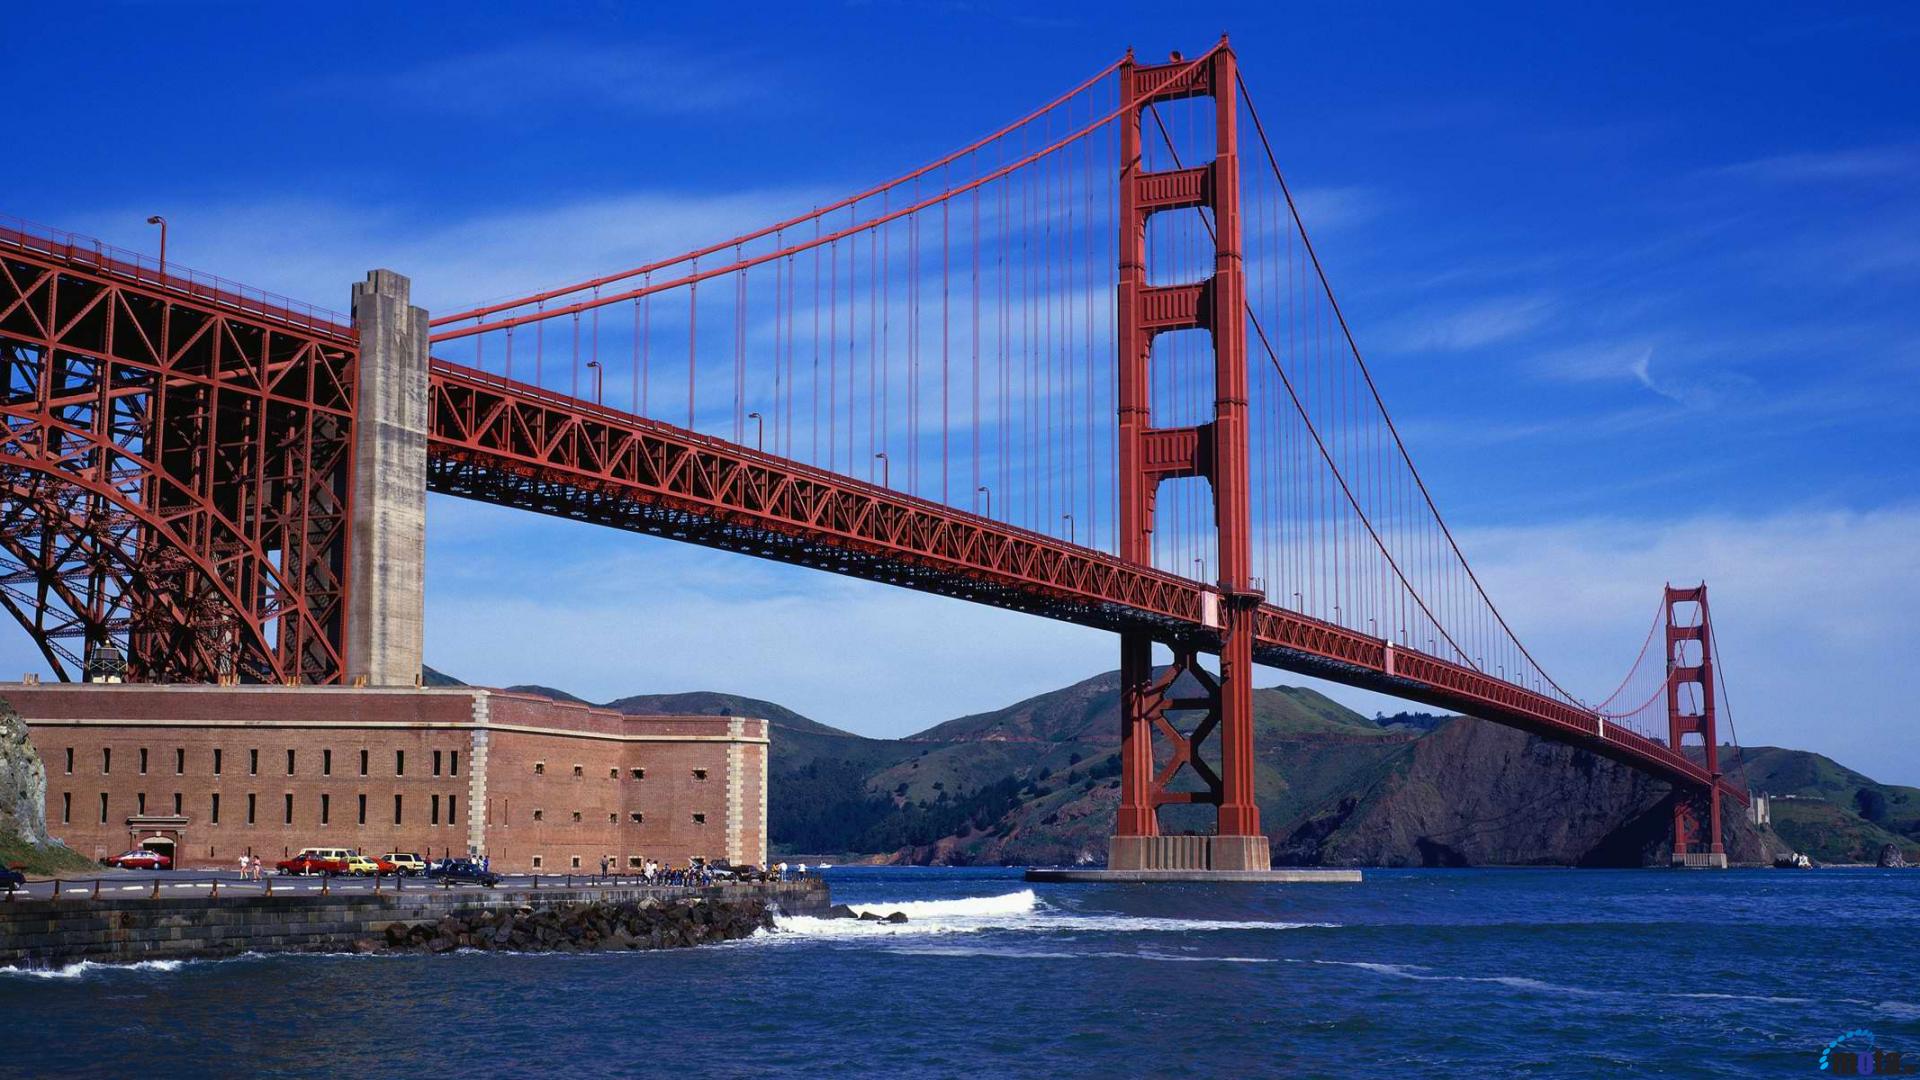 Download Wallpaper Panorama of Golden Gate suspension bridge 1920 x